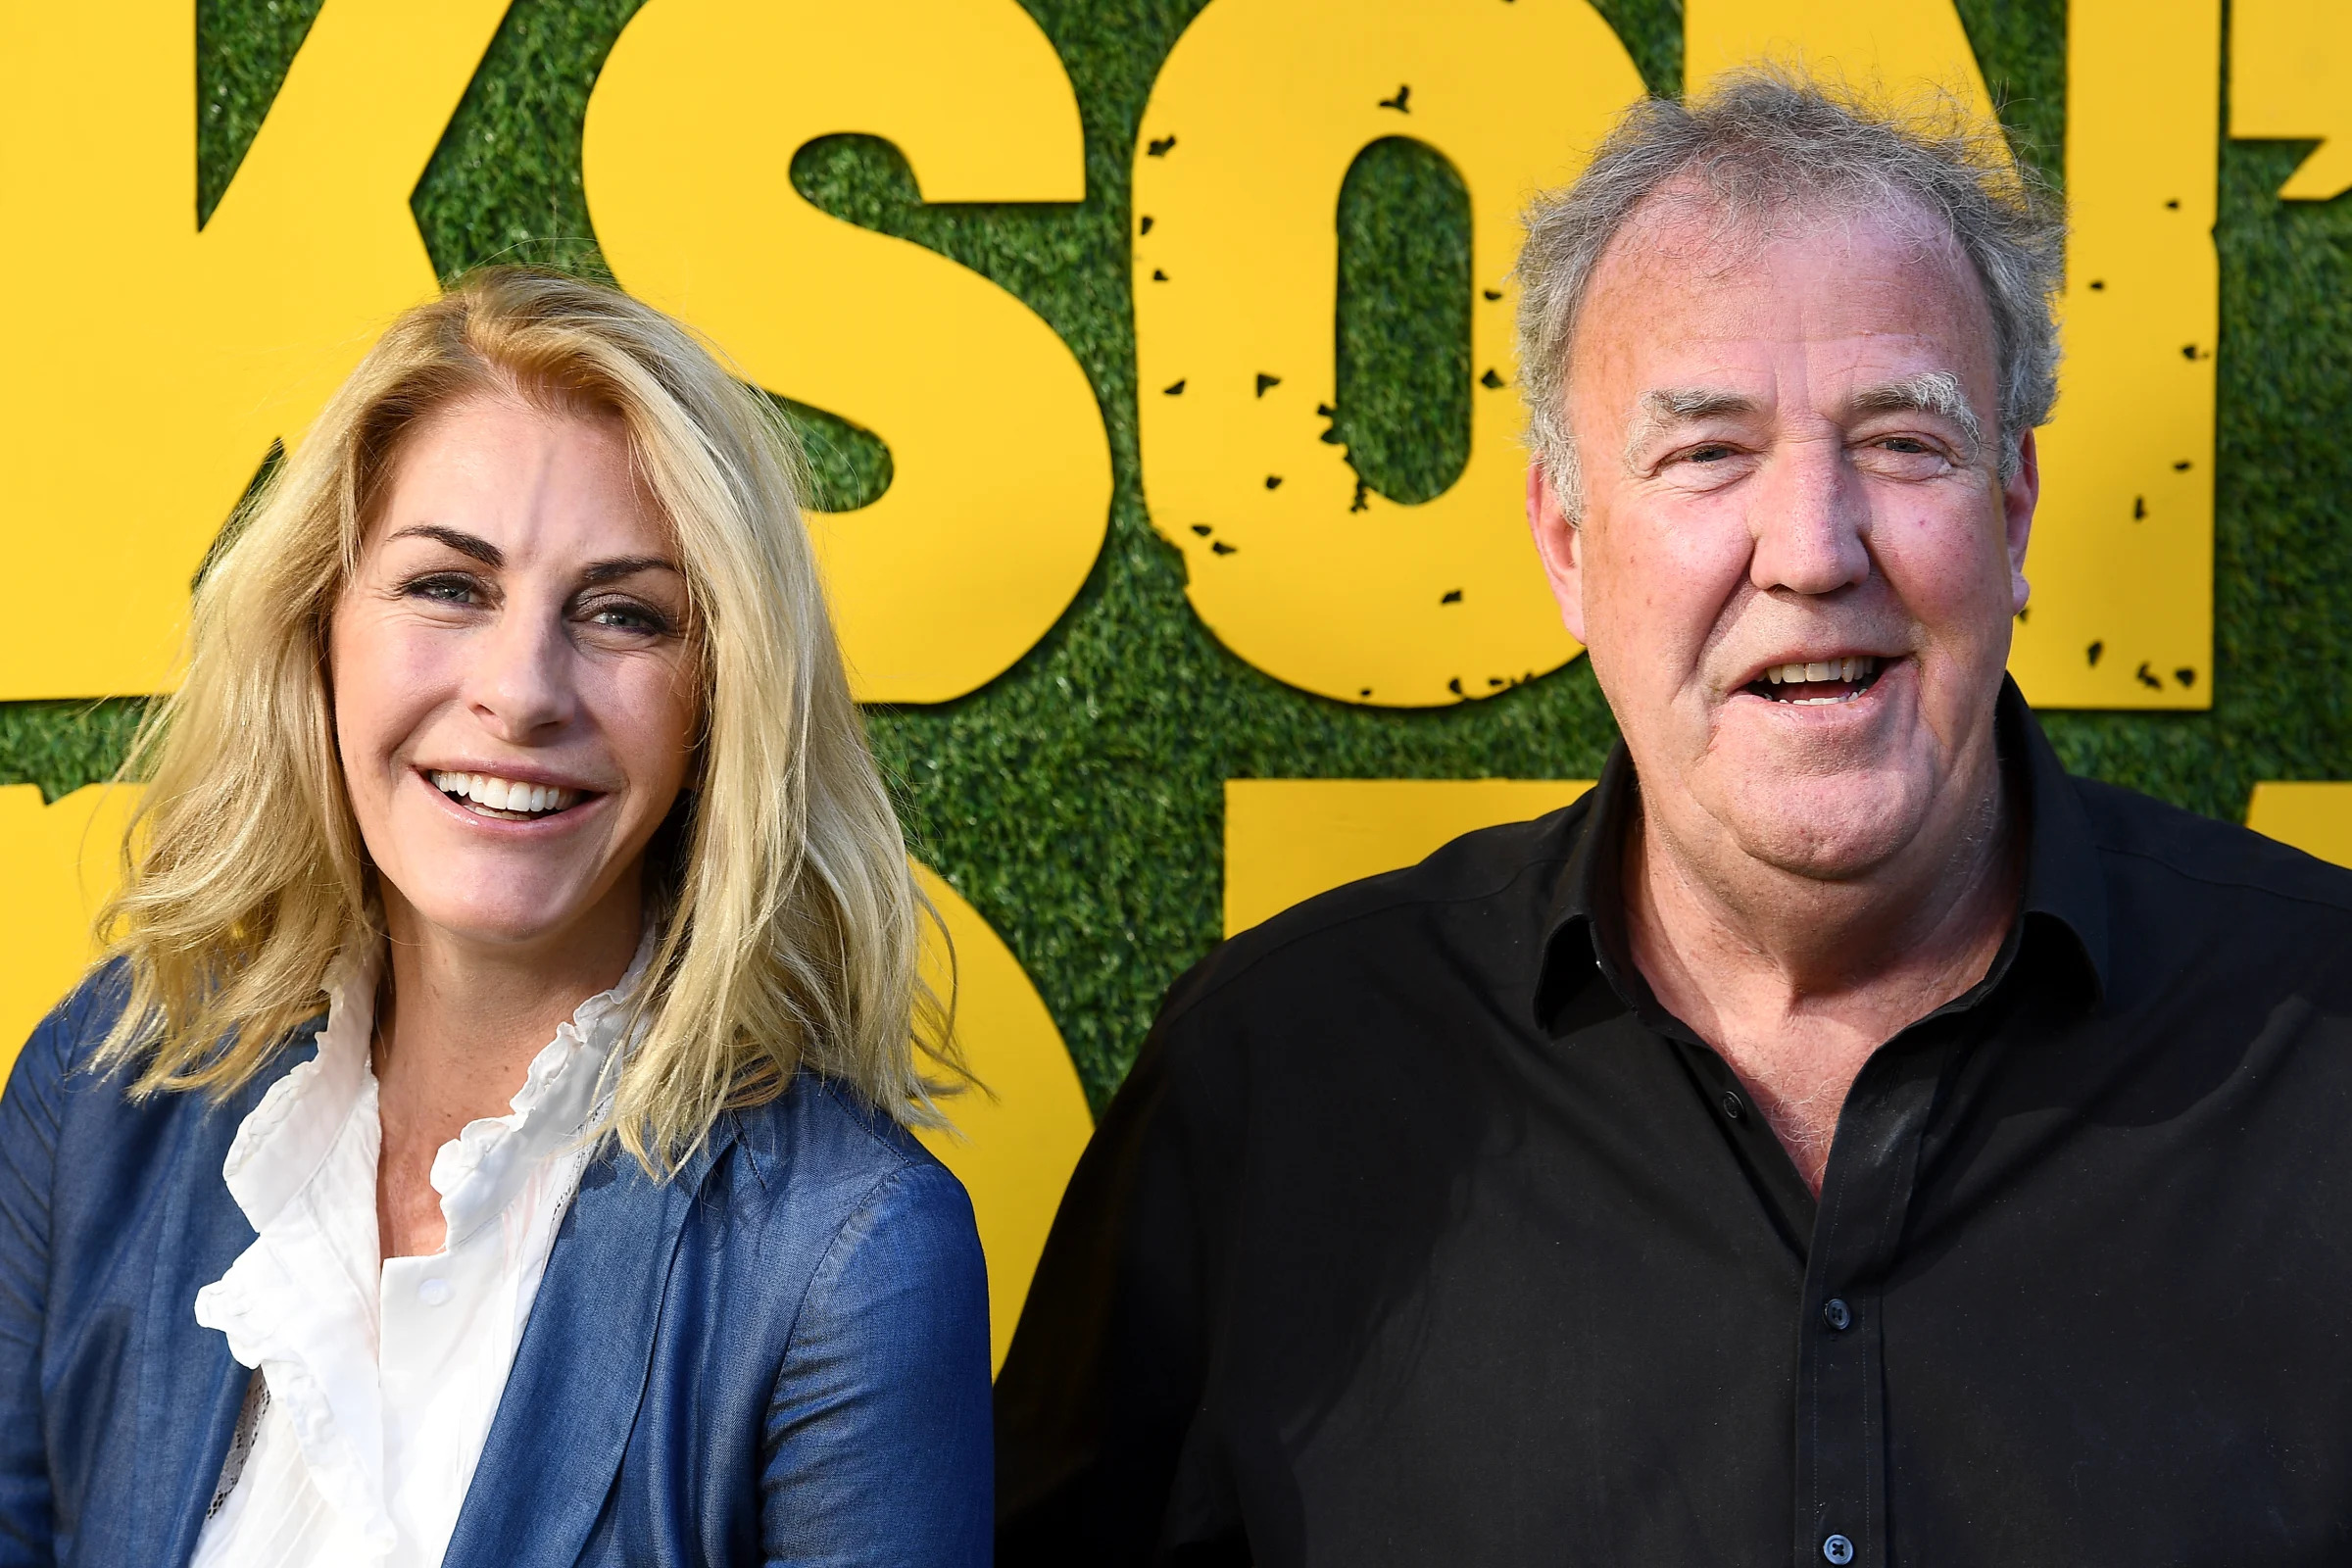 Lisa Hogan and Jeremy Clarkson promote Clarkson's Farm